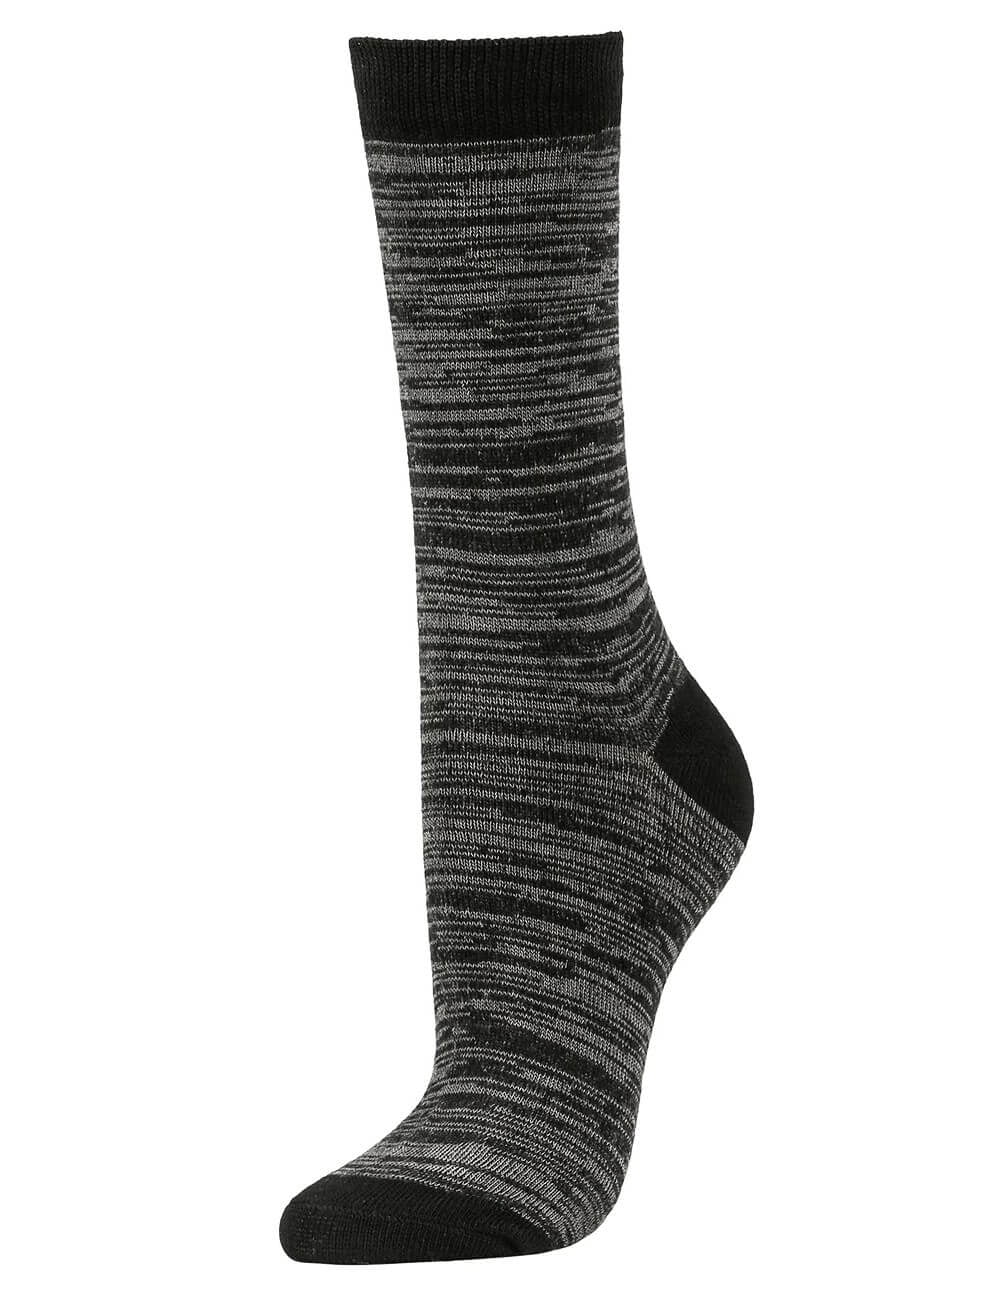 Women's Comfort Crew Socks, Black & Gray, 1 Pair - Walmart.com